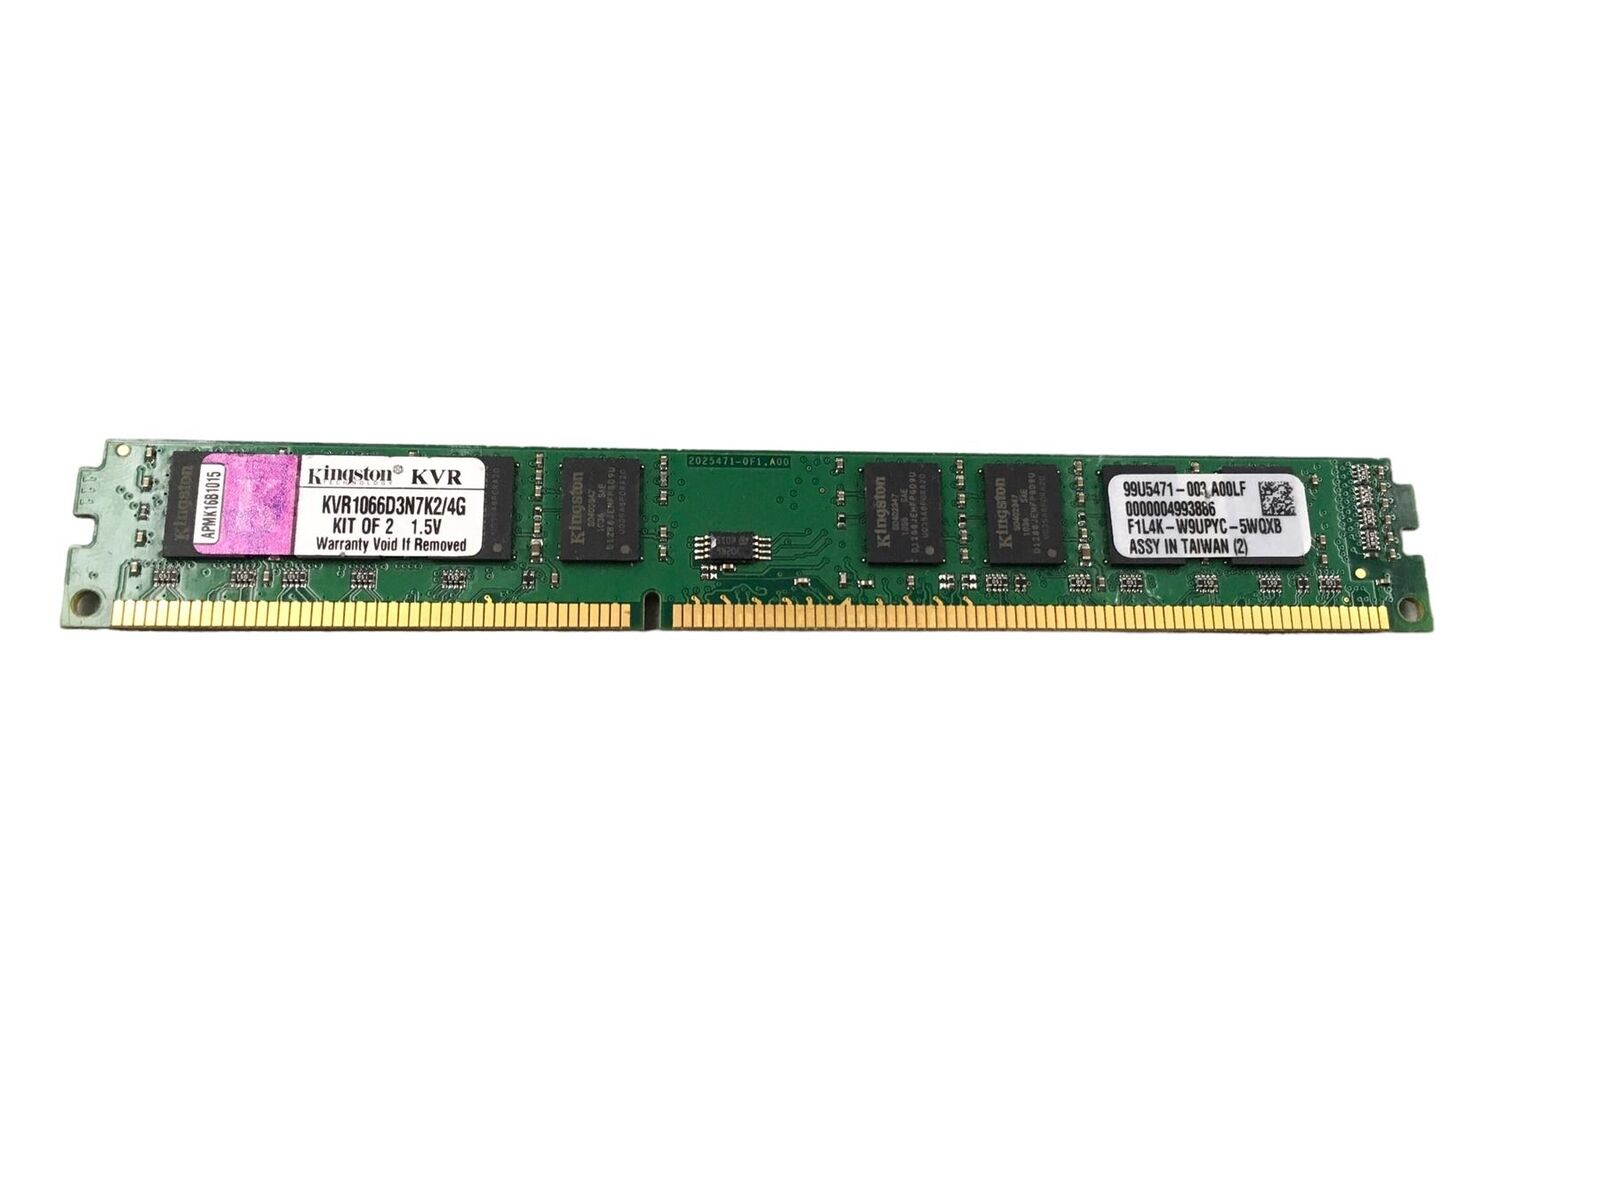 4GB Kingston KVR1066D3N7K2/4G 1066MHz PC3-8500U DDR-3 Memory